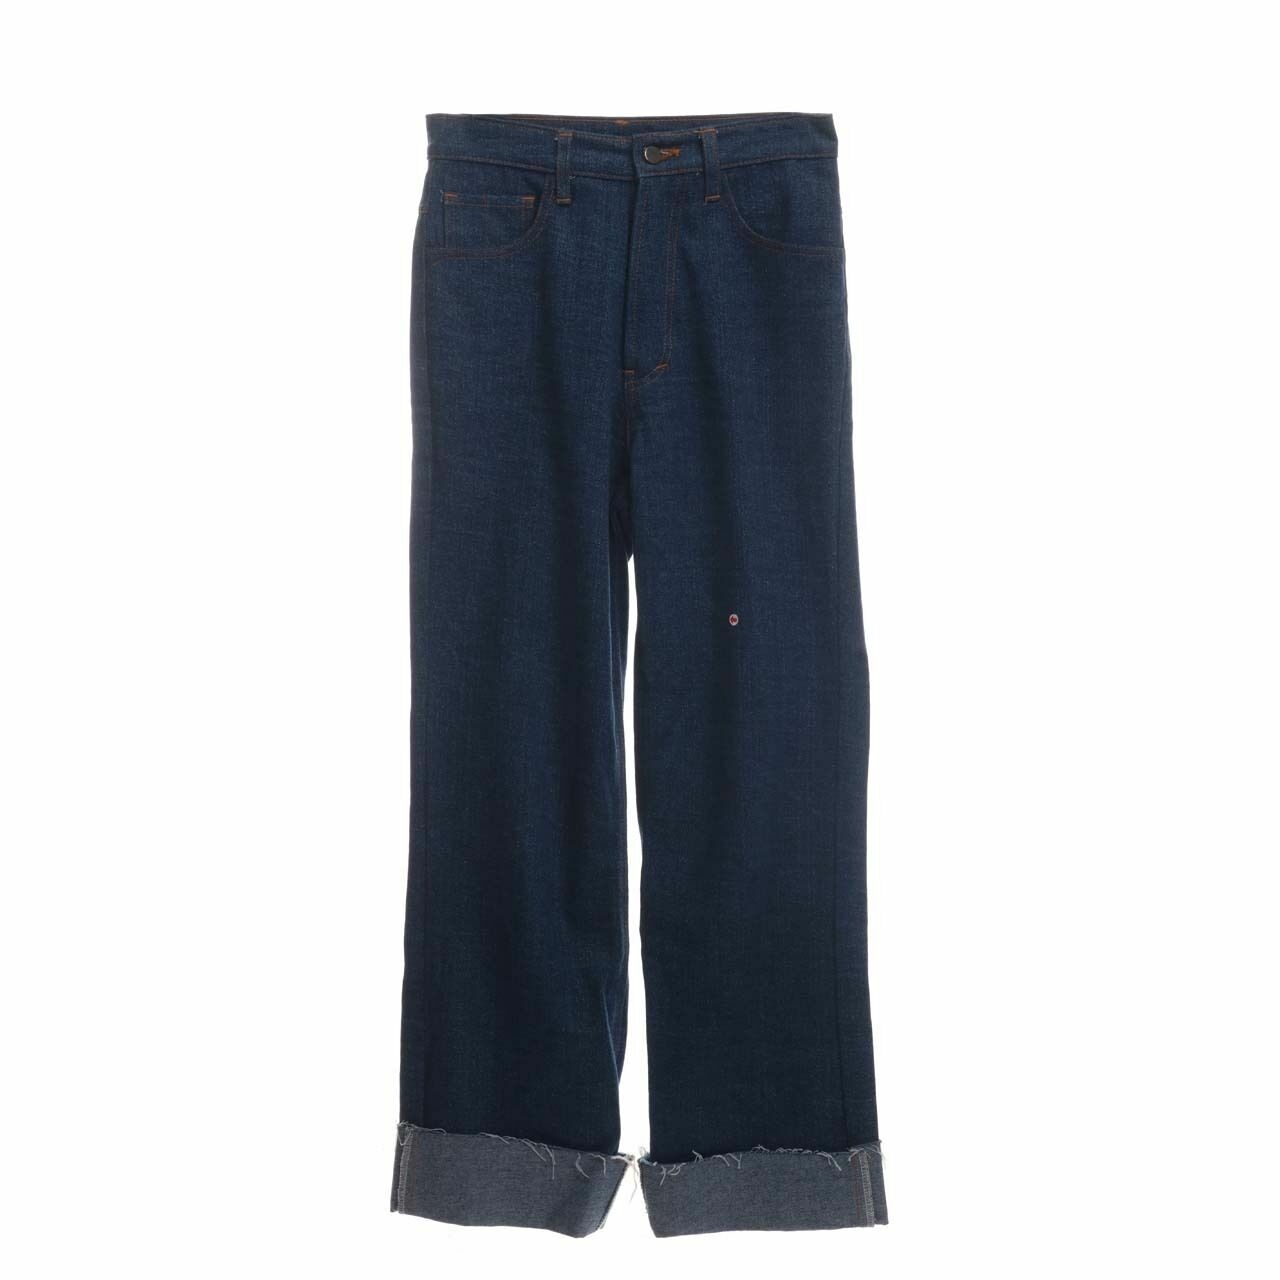 Jinzu Dark Blue Jeans